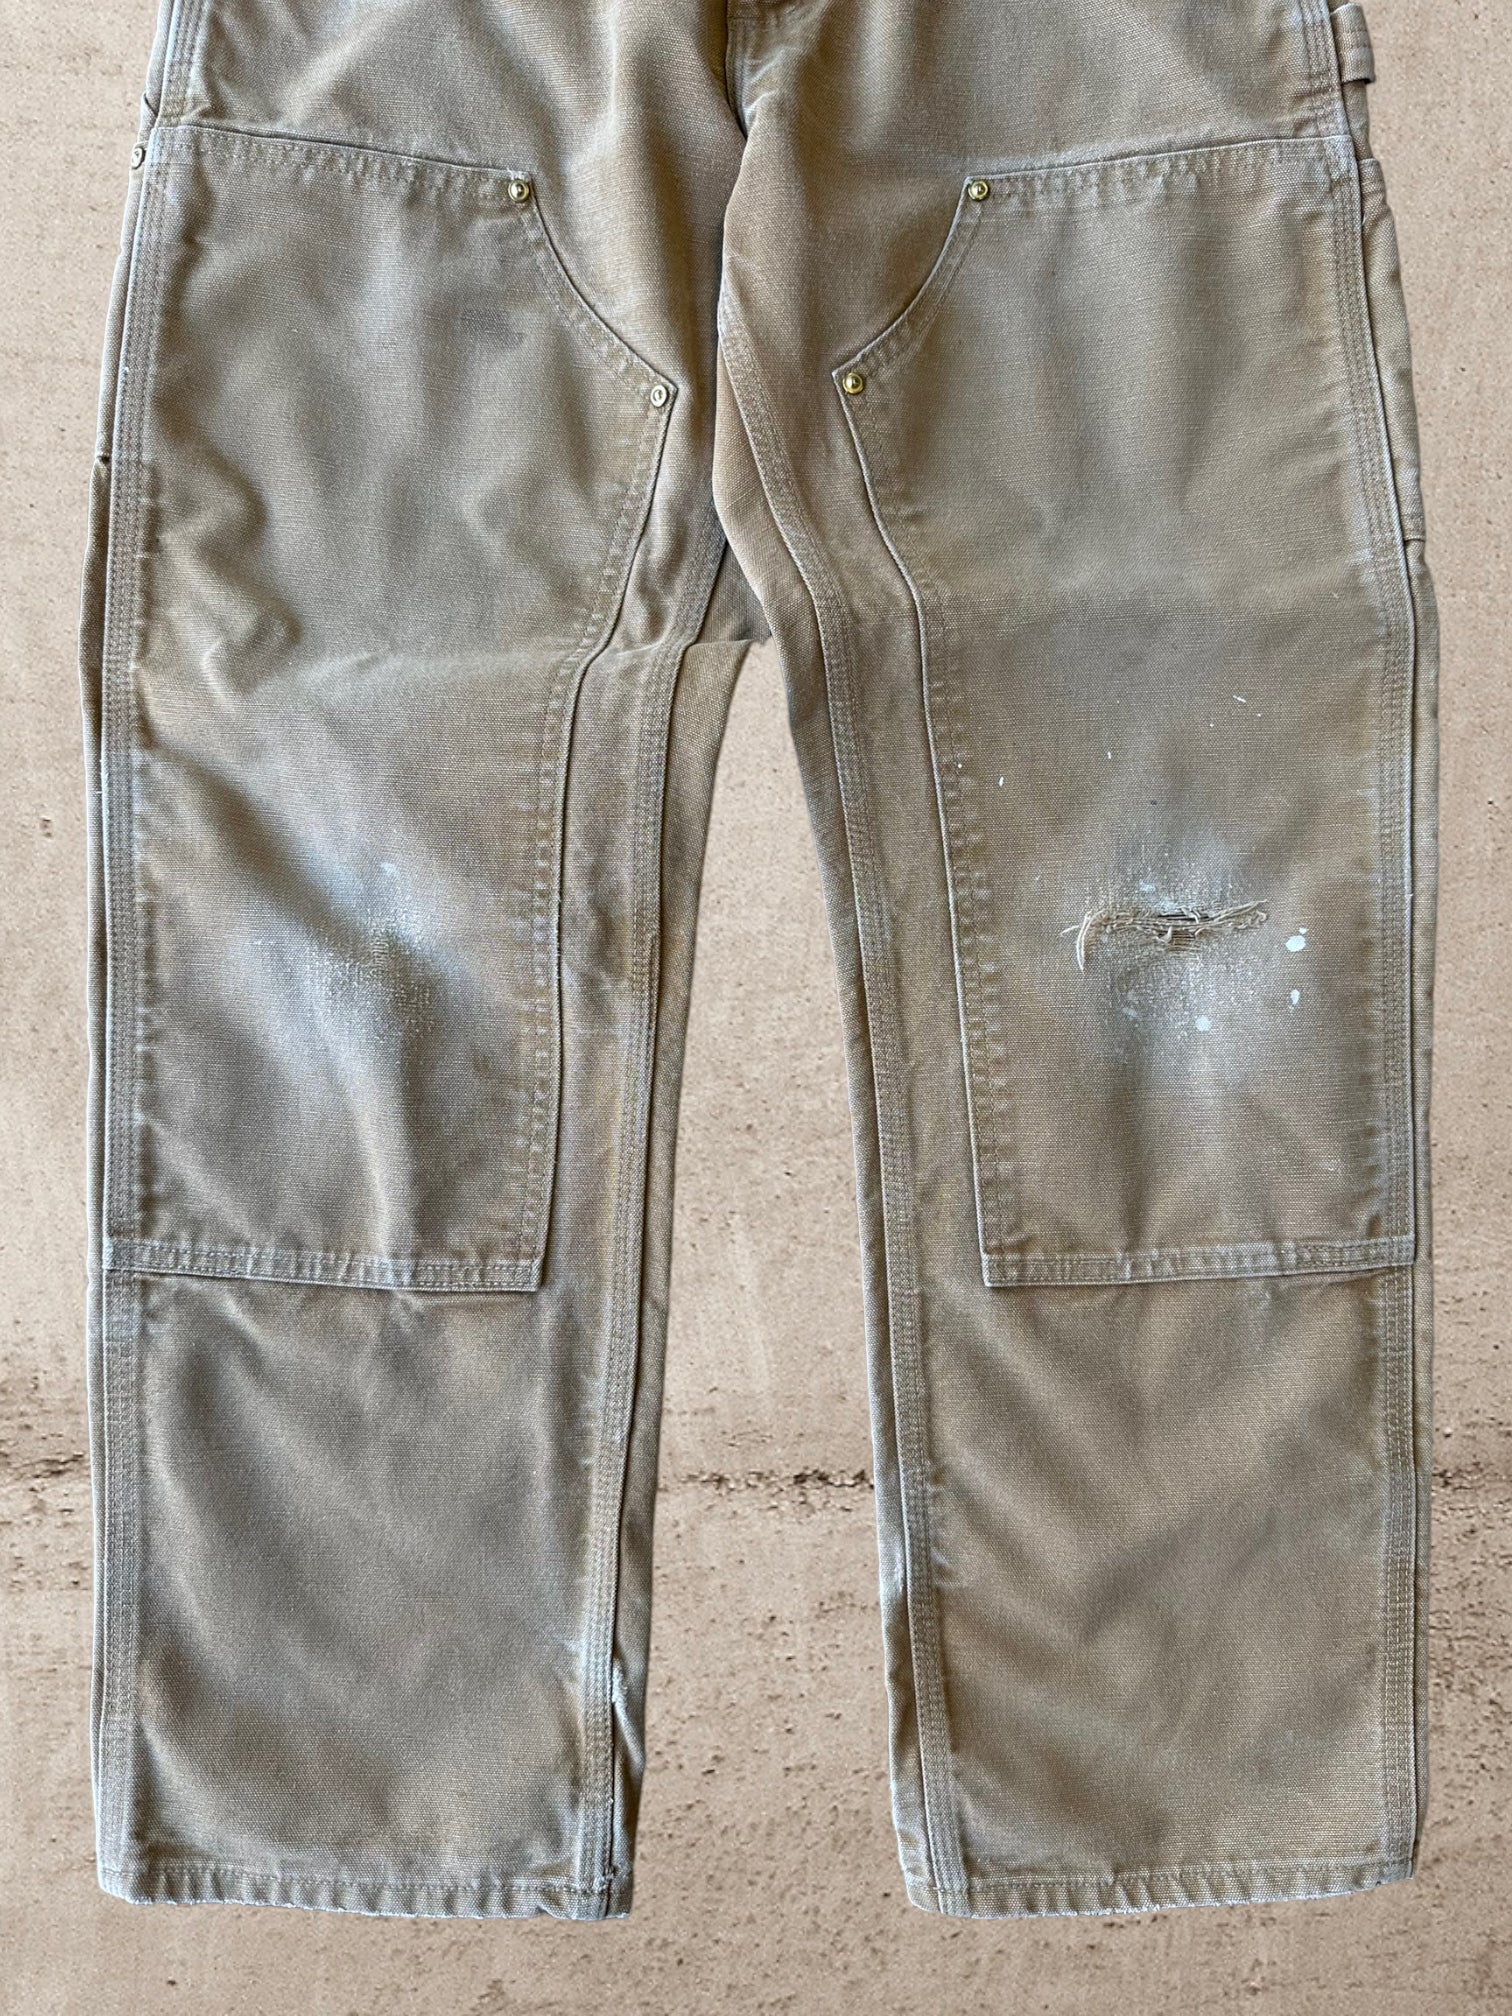 Vintage Carhartt Double Knee Pants - 30x28